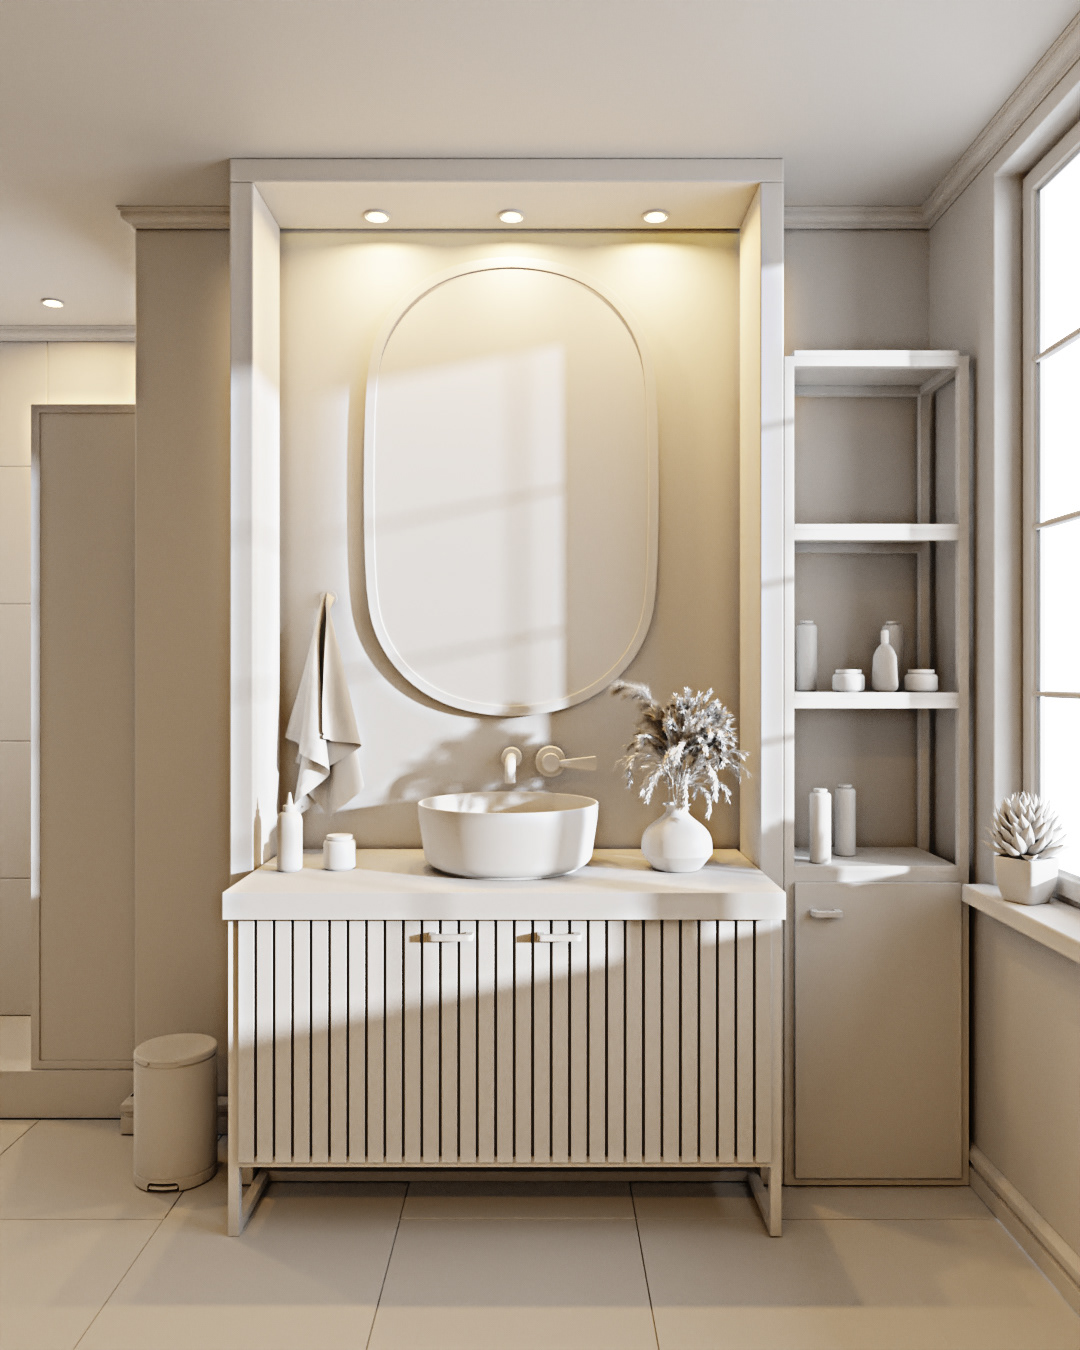 3dsmax architecture bathroom blender CGI Interior rendering vray free freedownload